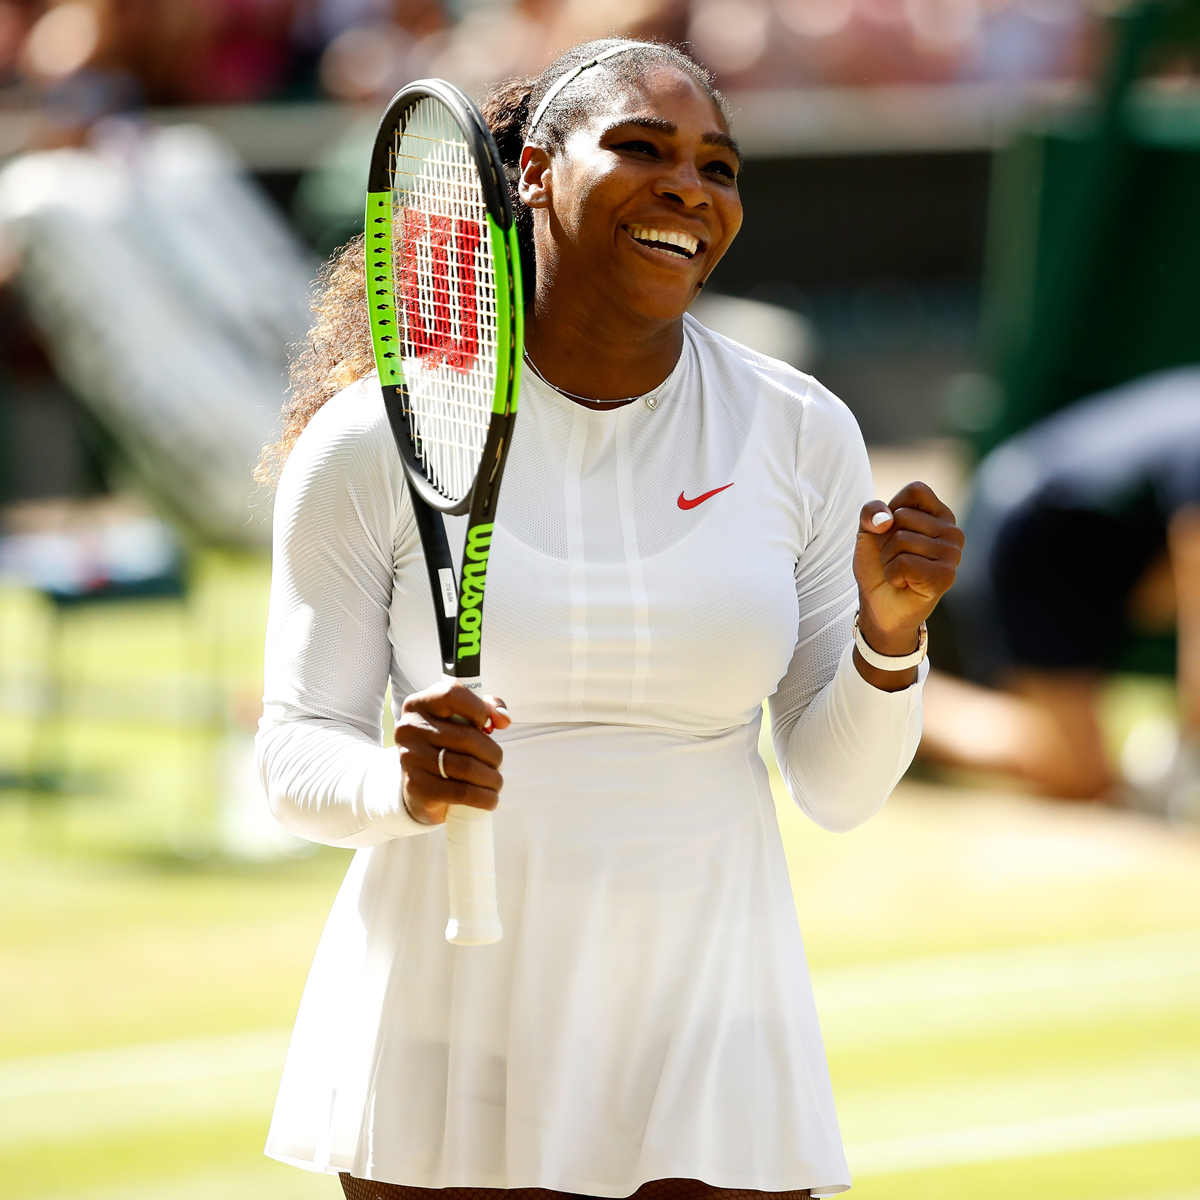 Serena Williams Just Served Up the Best Wimbledon Return Announcement